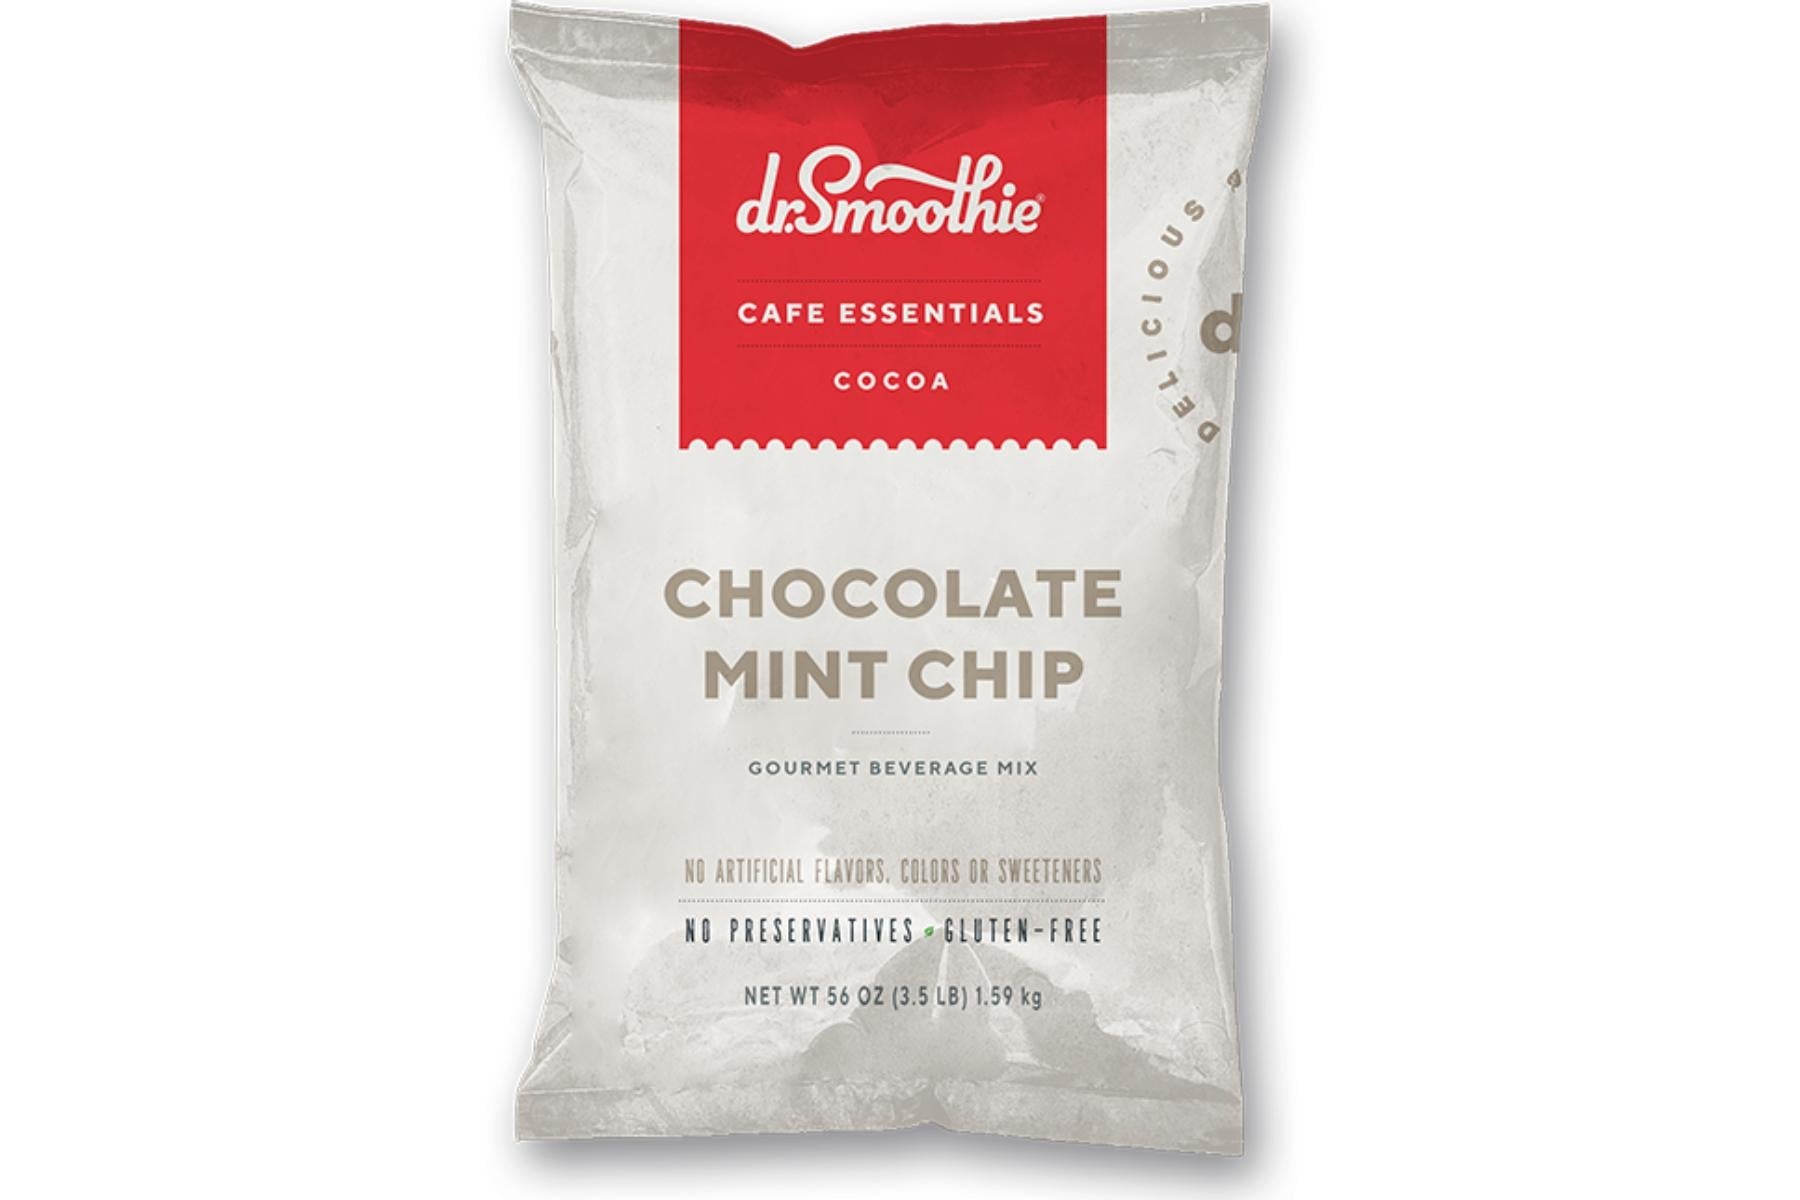 Dr. Smoothie Cafe Essentials Cocoa - 3.5lb Bulk Bag: Chocolate Mint Chip